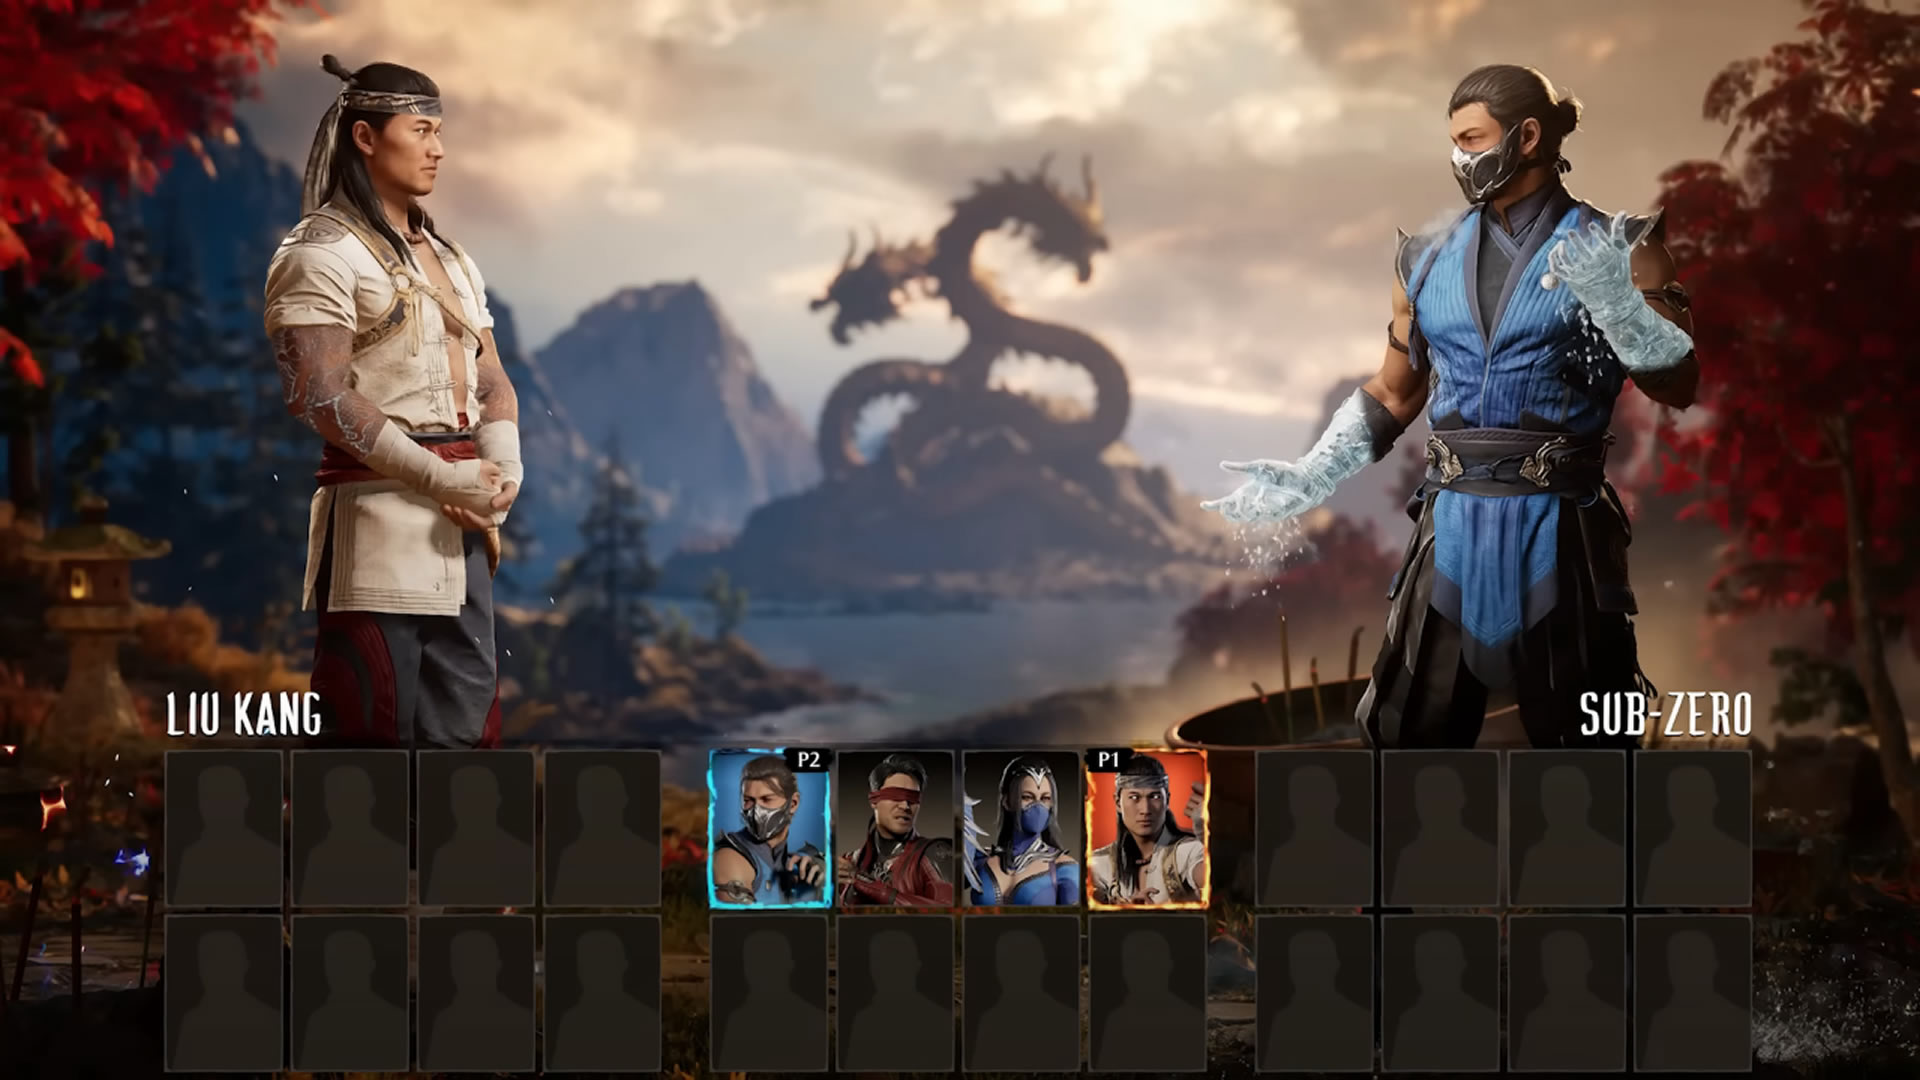 Mortal Kombat 1 exige 100GB na versão PC